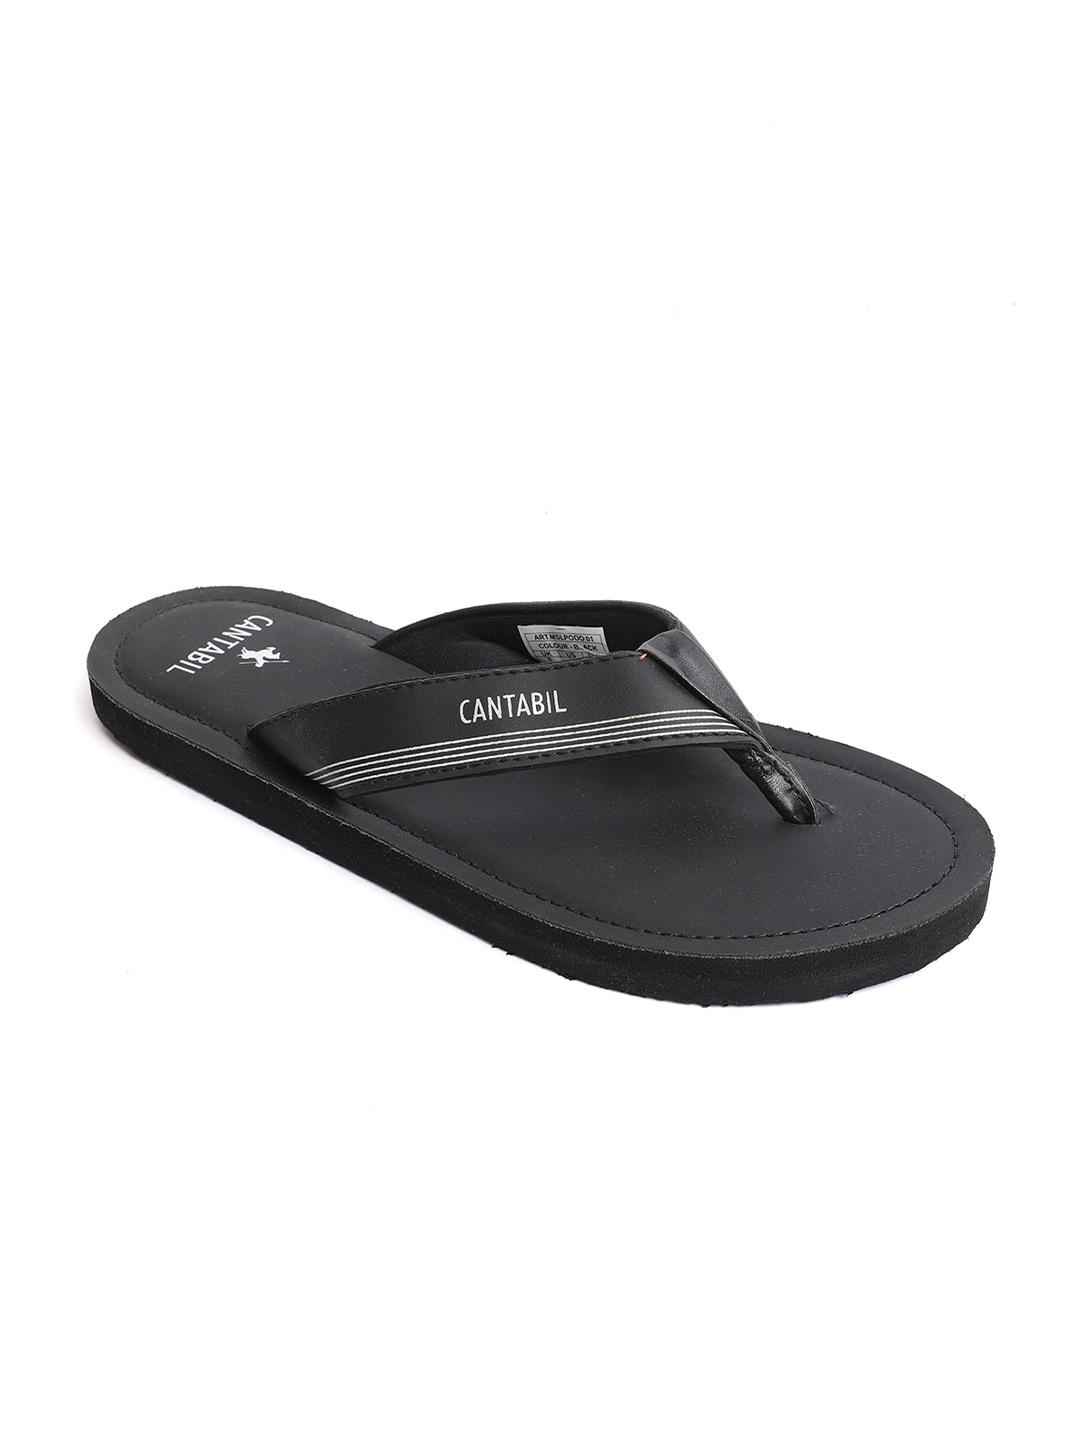 cantabil-men-black-&-white-printed-thong-flip-flops